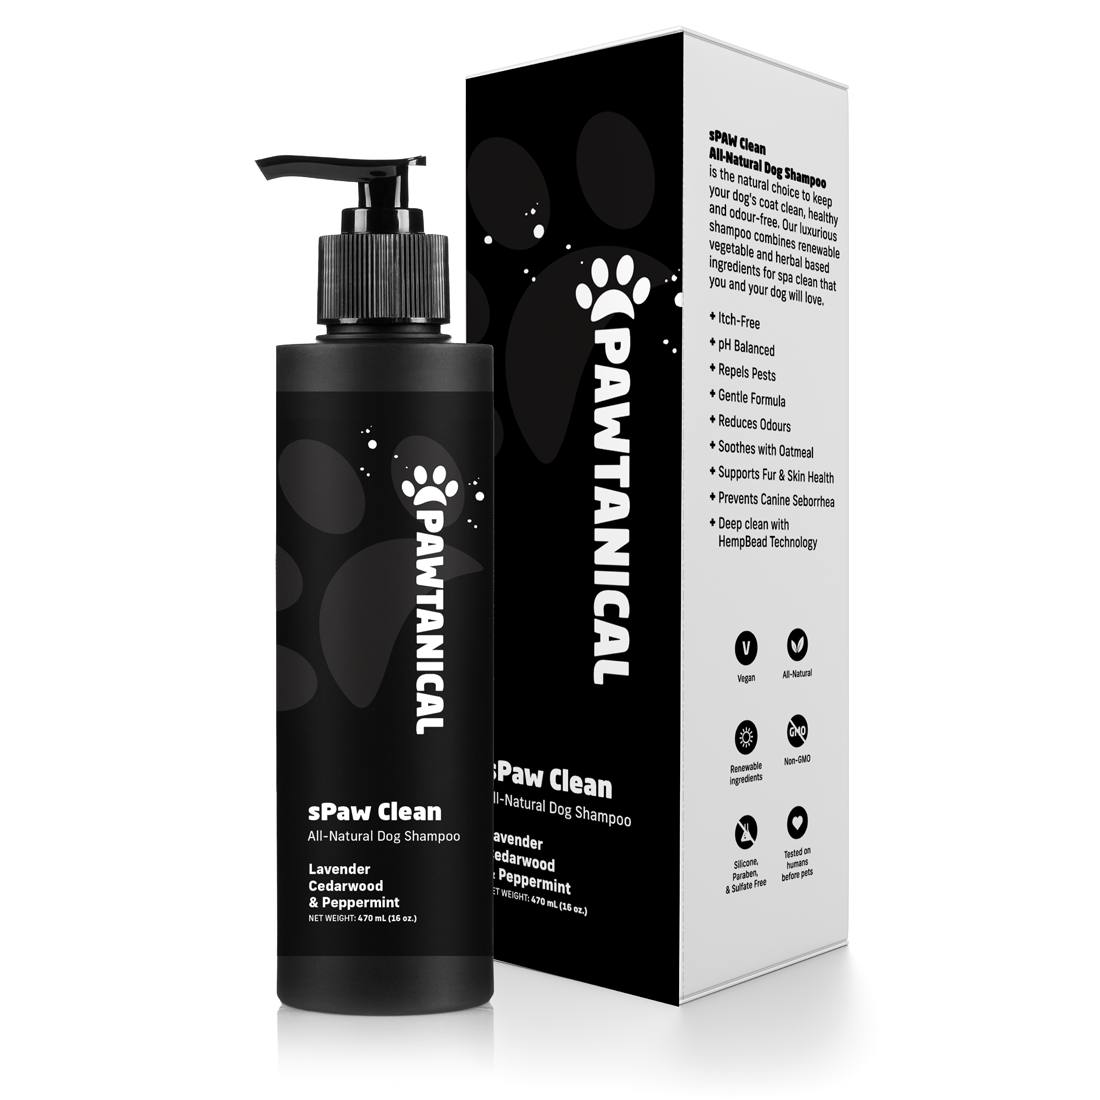 sPaw Clean · All-Natural Dog Shampoo